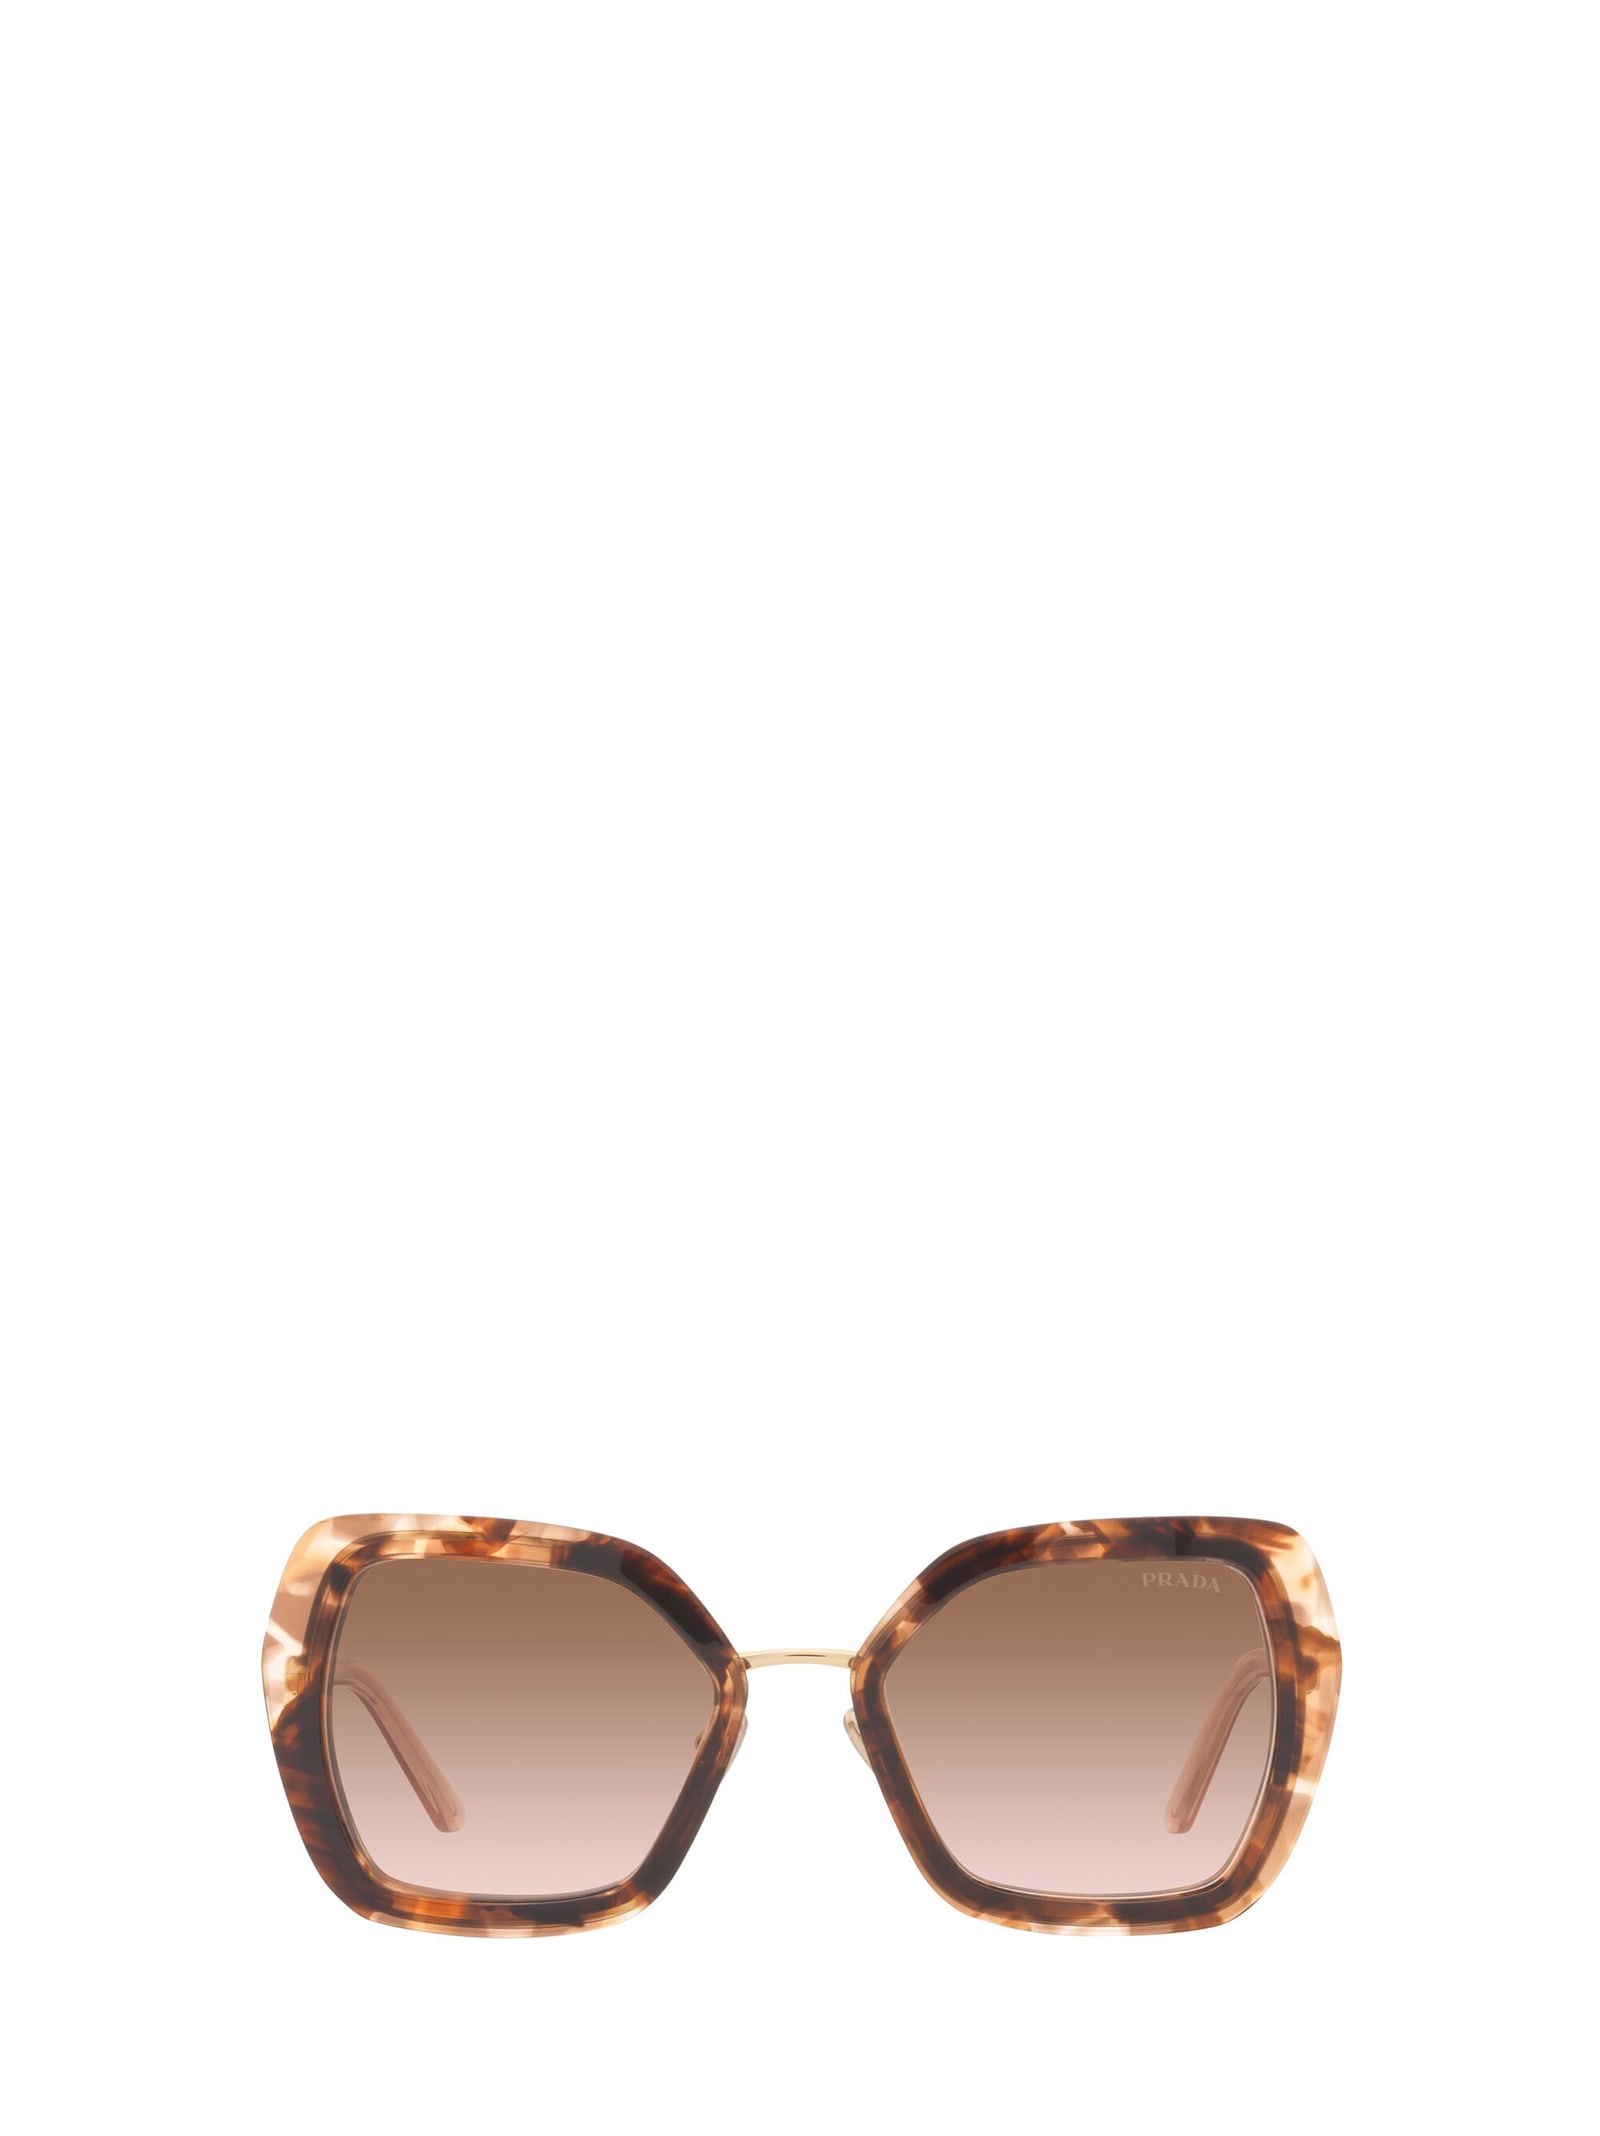 Prada Eyewear Prada Pr 53ys Caramel Tortoise Sunglasses